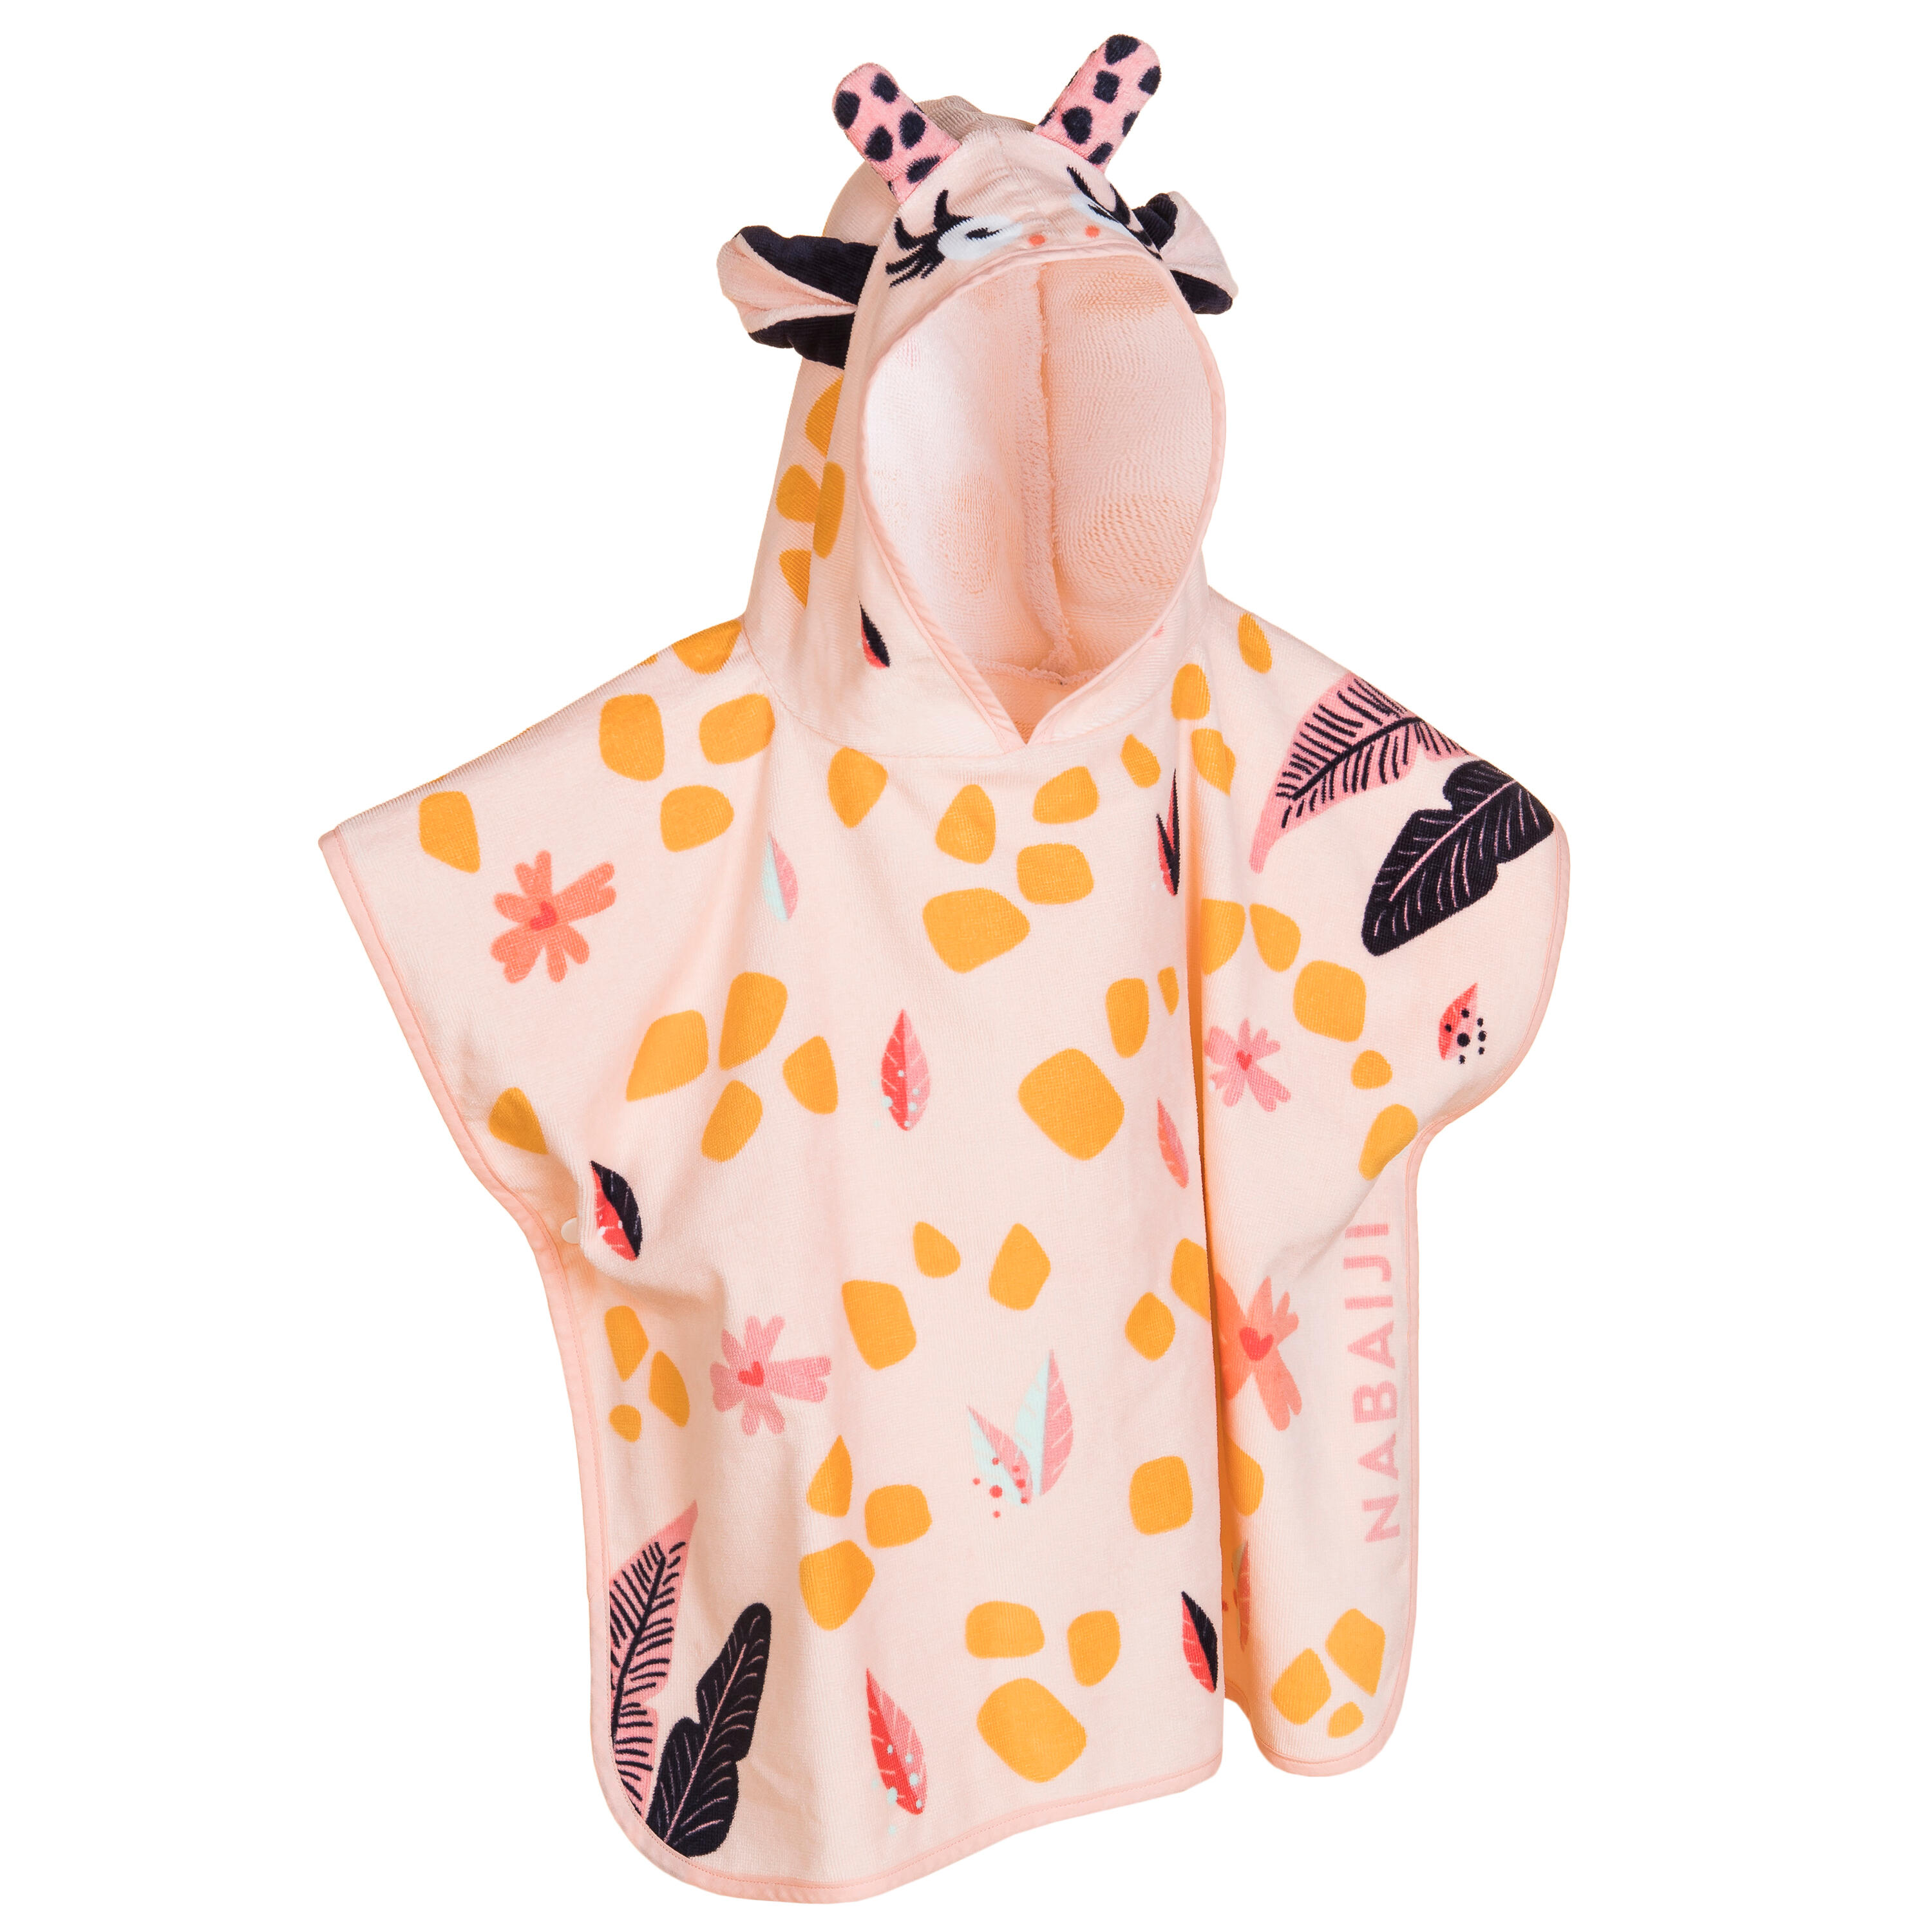 Kid's Bath Poncho Cotton - Giraffe White Pink 1/8